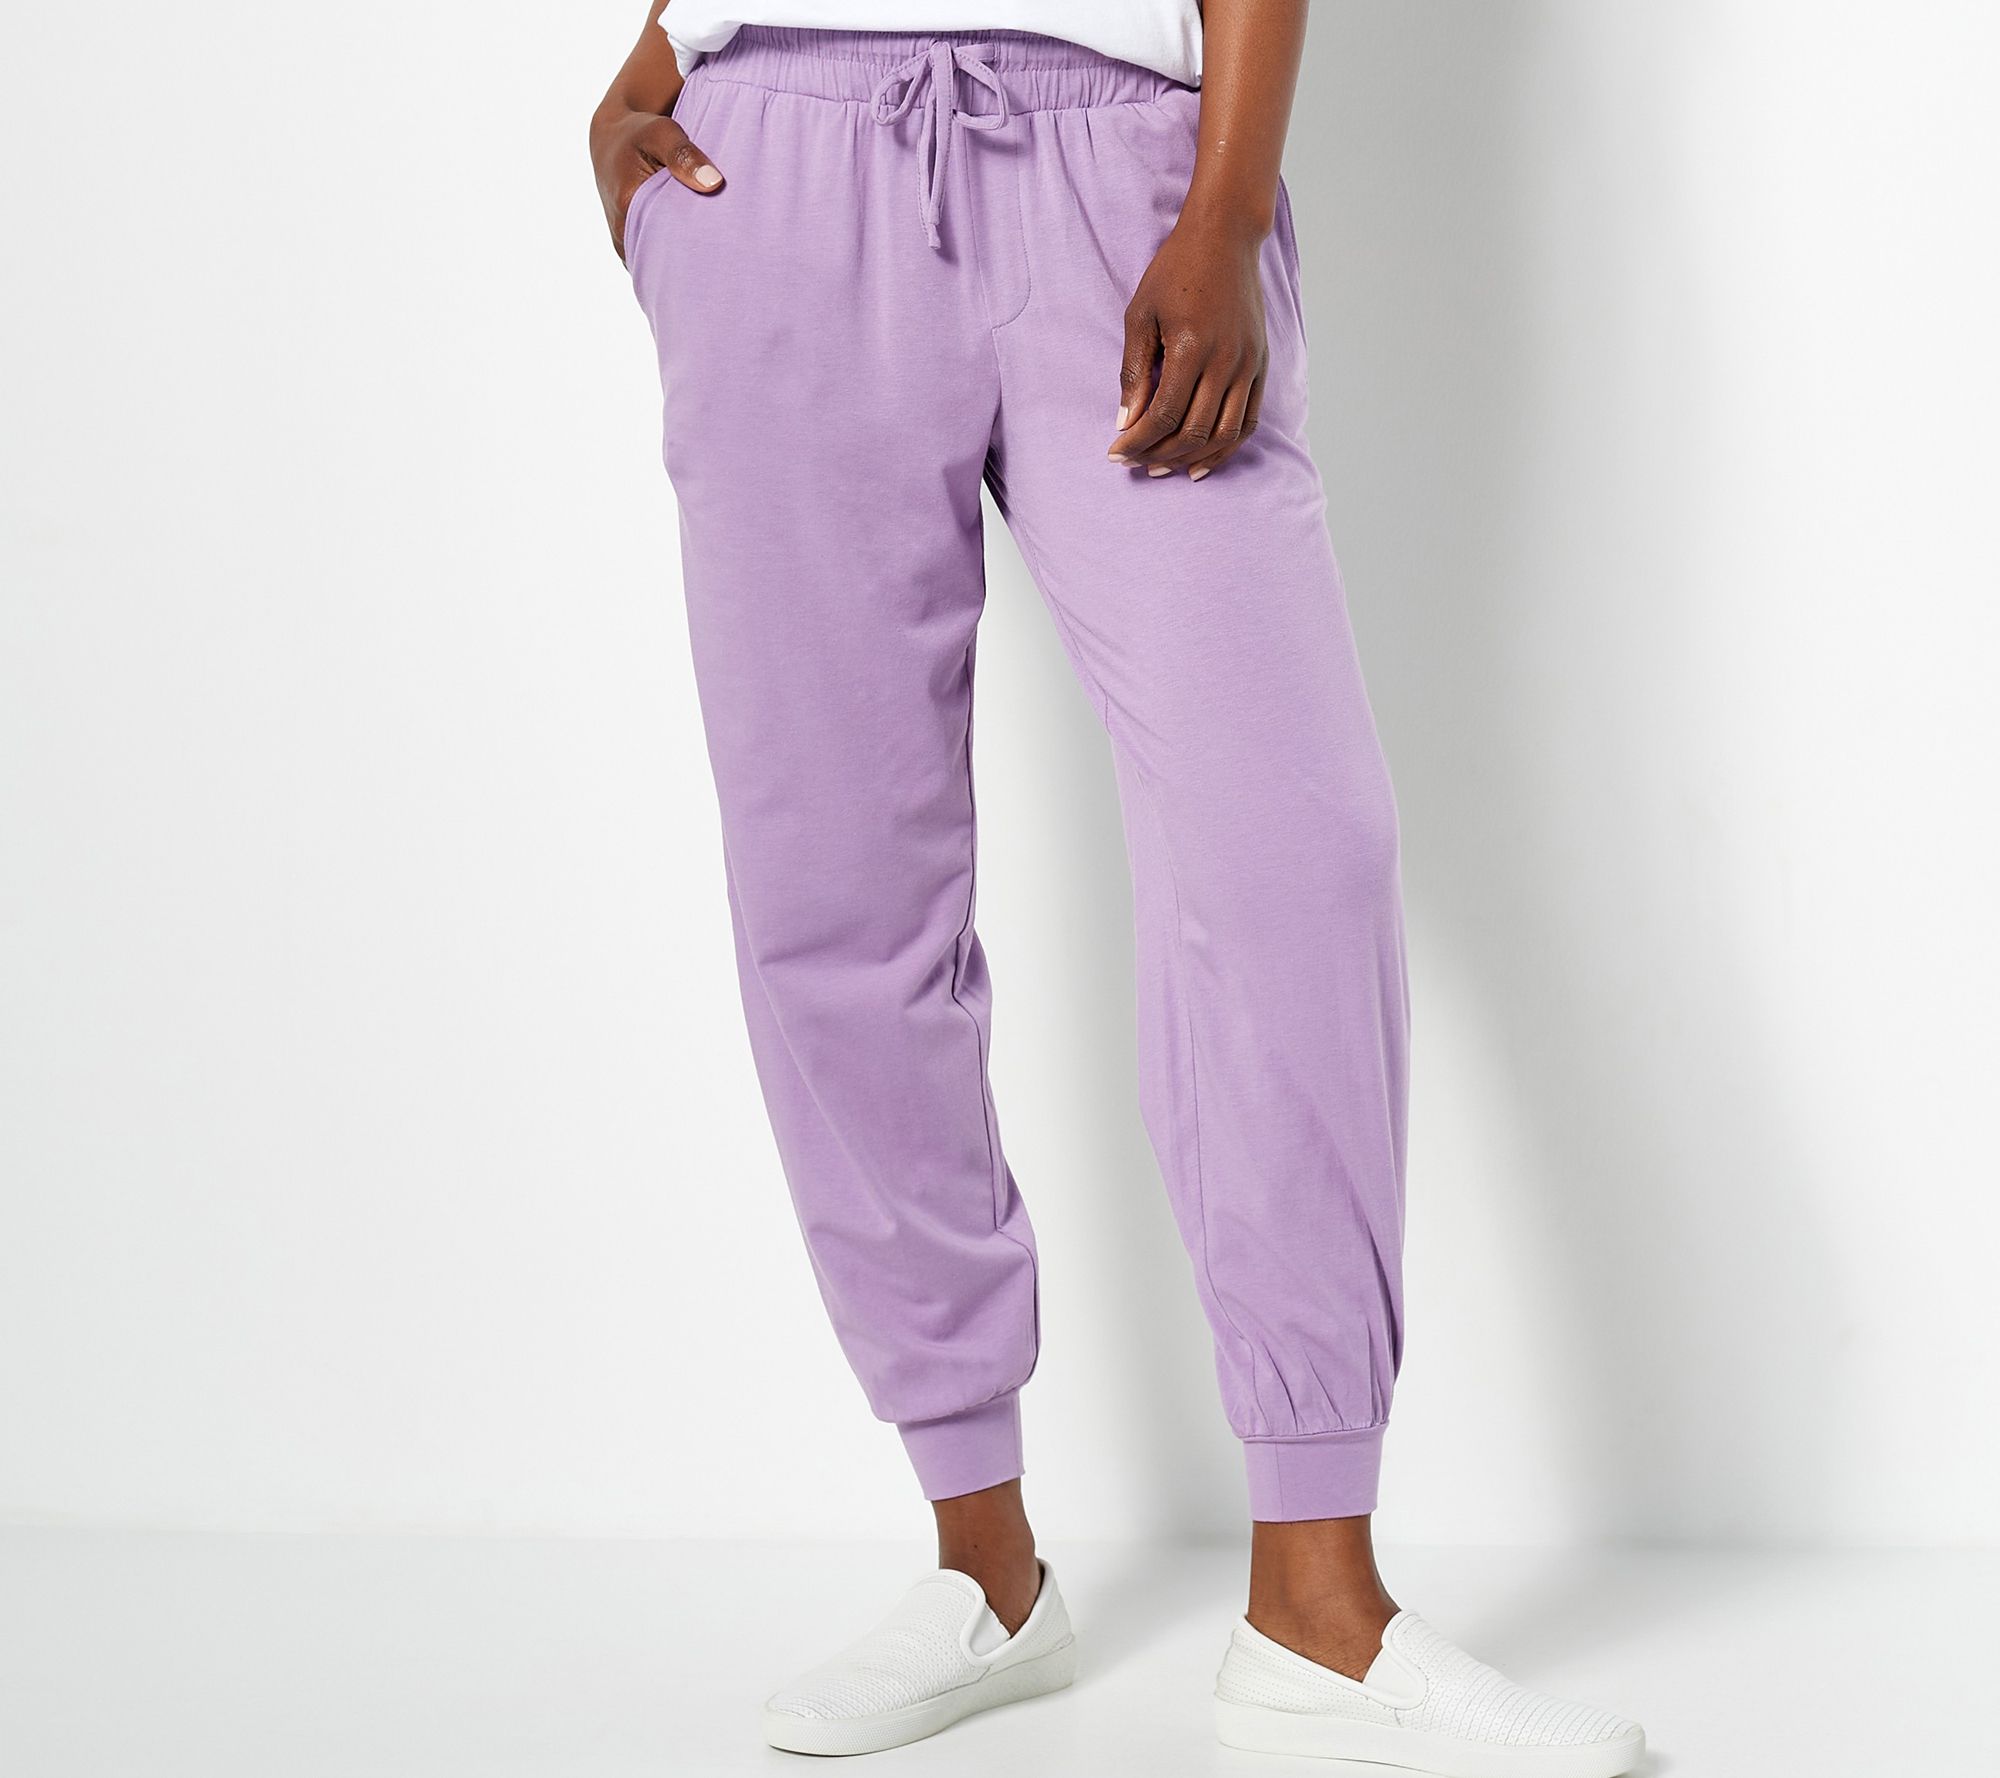 Women's joggers sweatpants with added modal - light purple